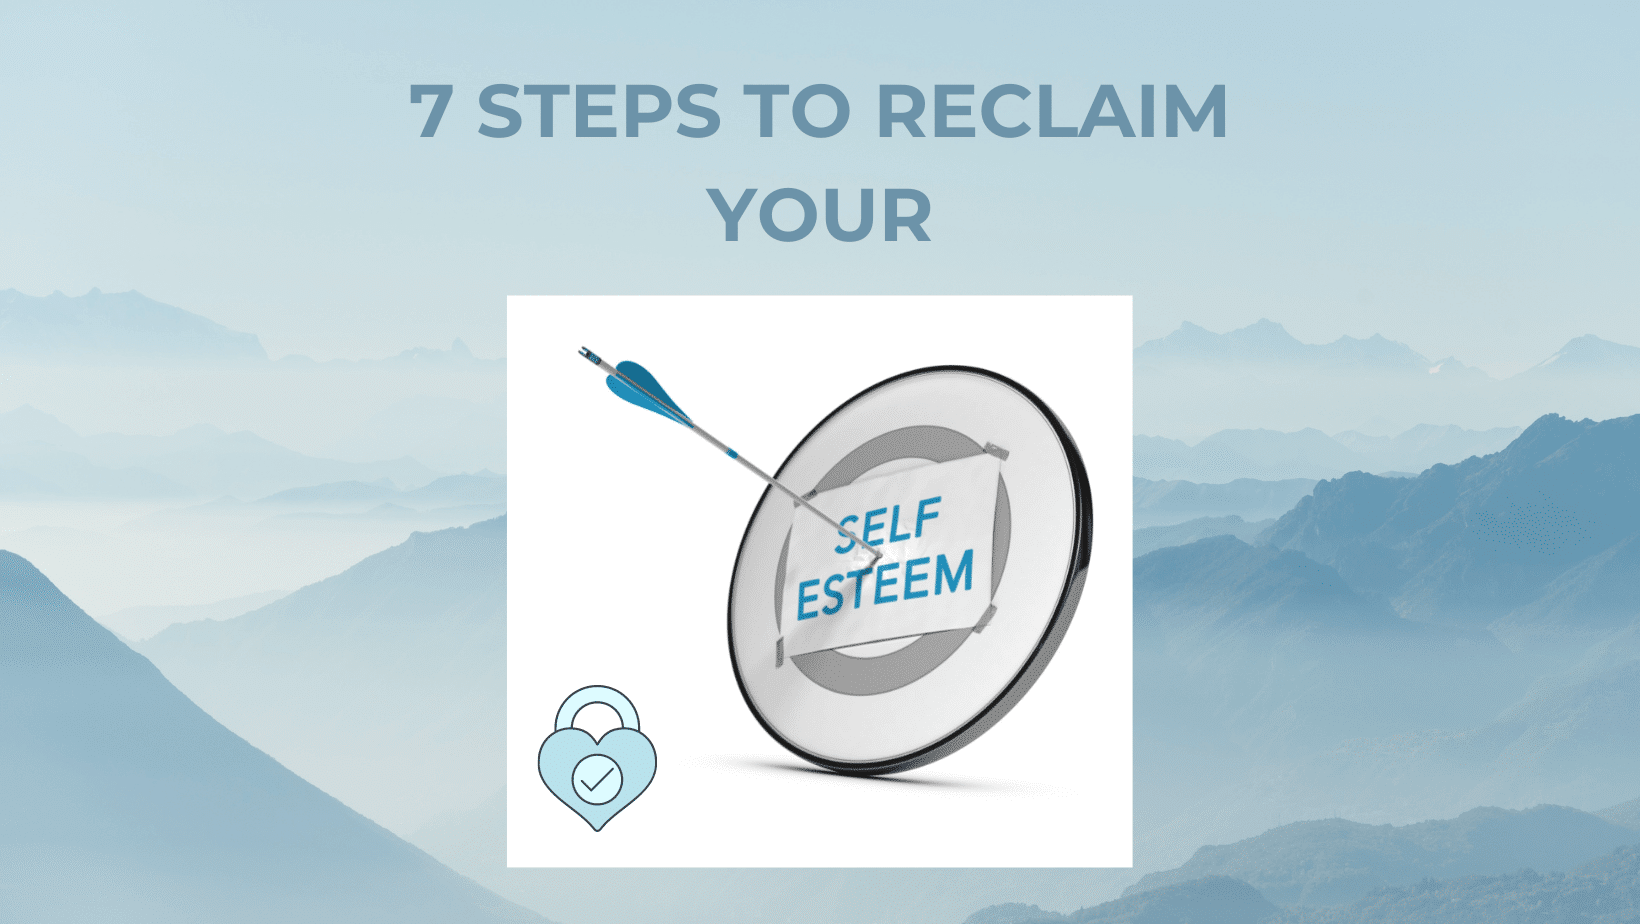 7 STEPS TO RECLAIM YOUR SELF-ESTEEM